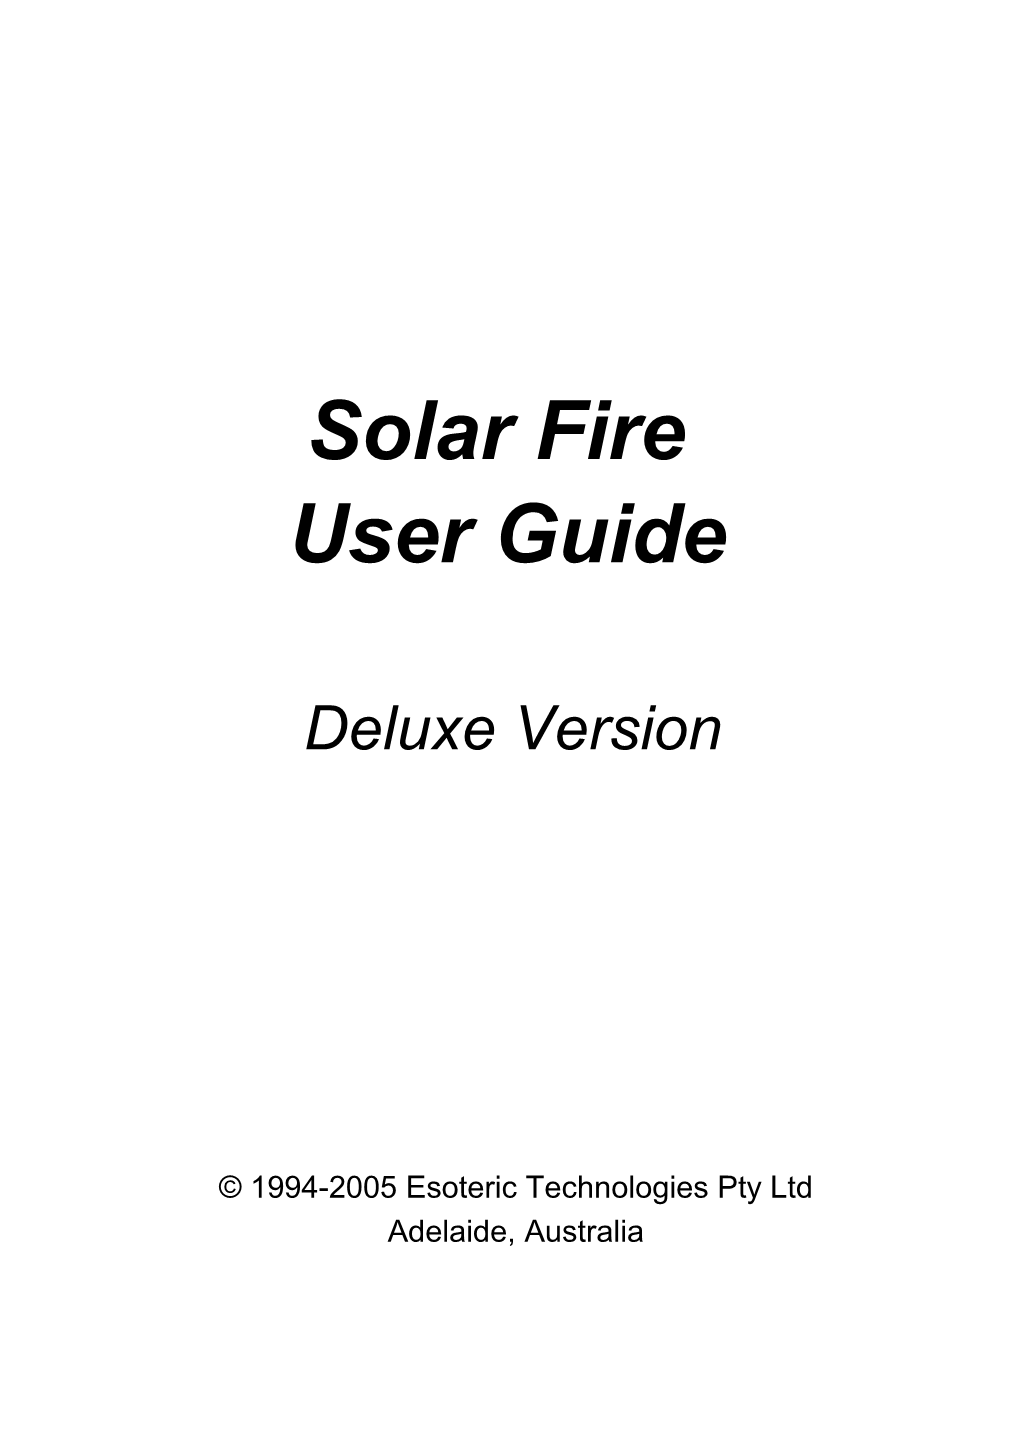 Solar Fire Deluxe User Guide